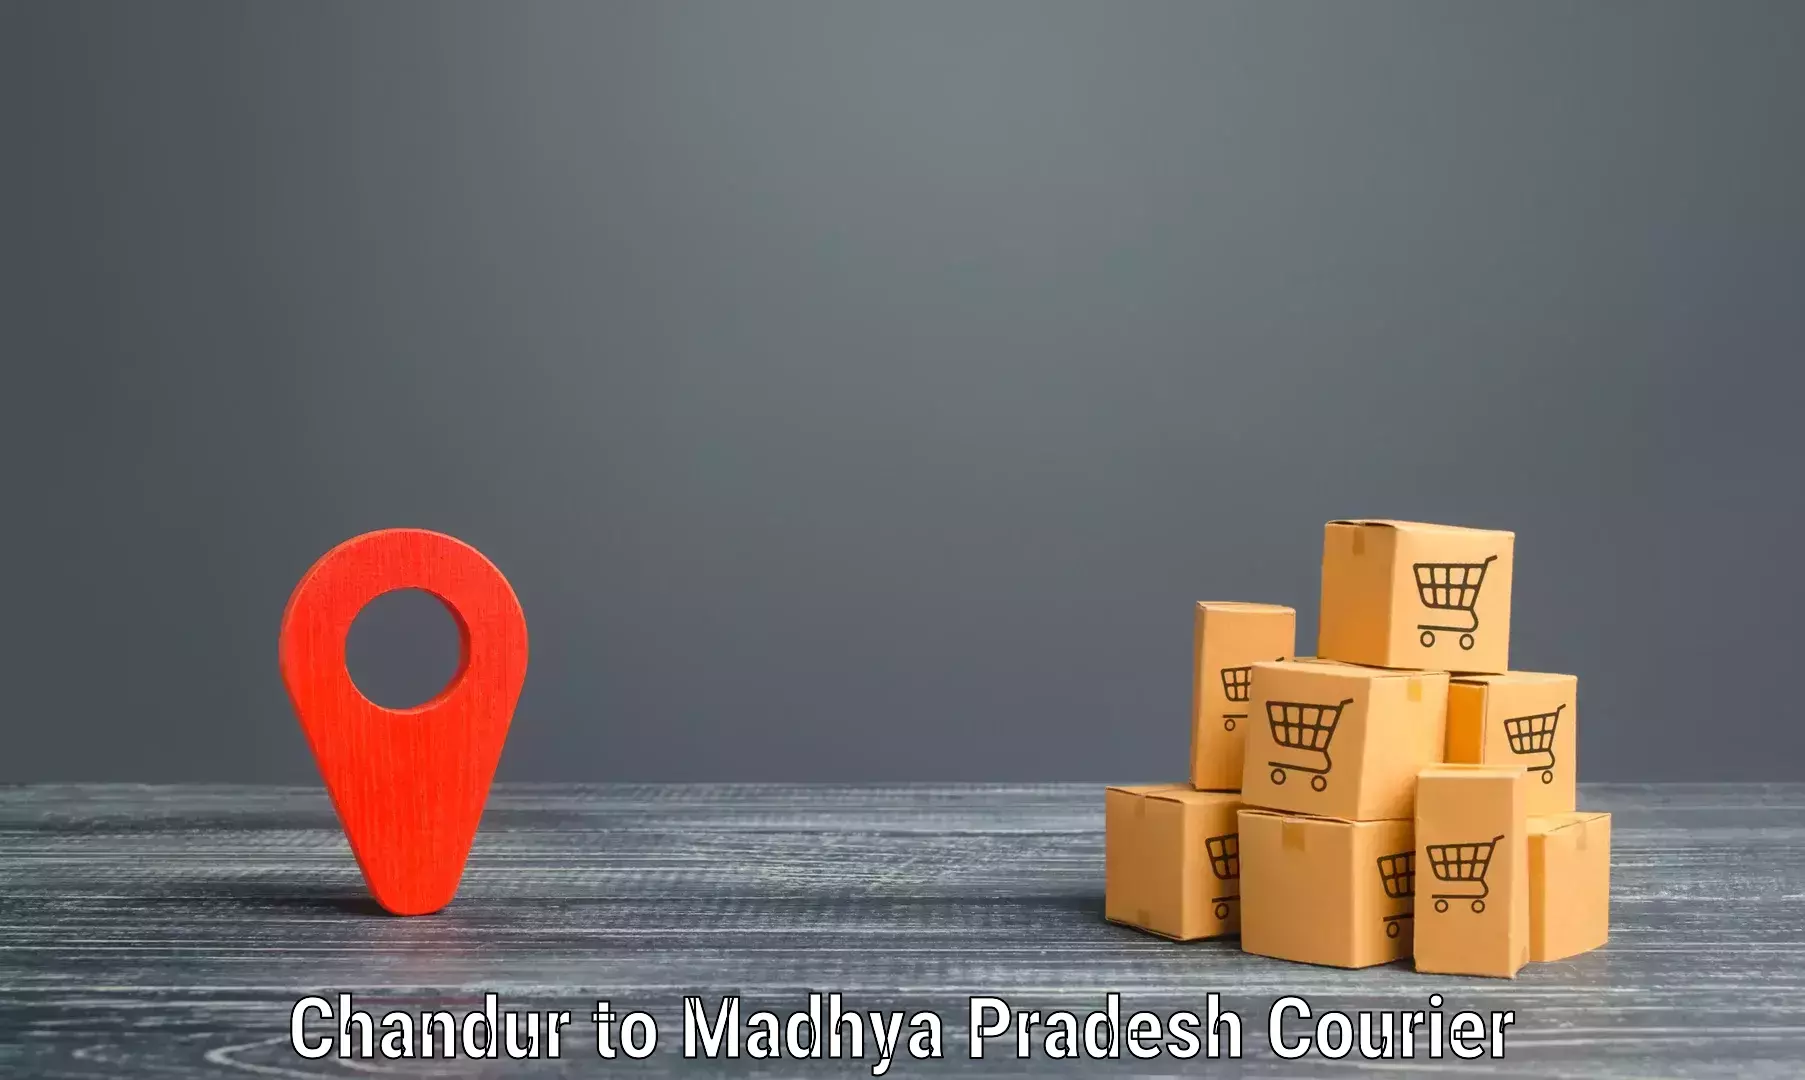 Express courier capabilities Chandur to Nalkheda